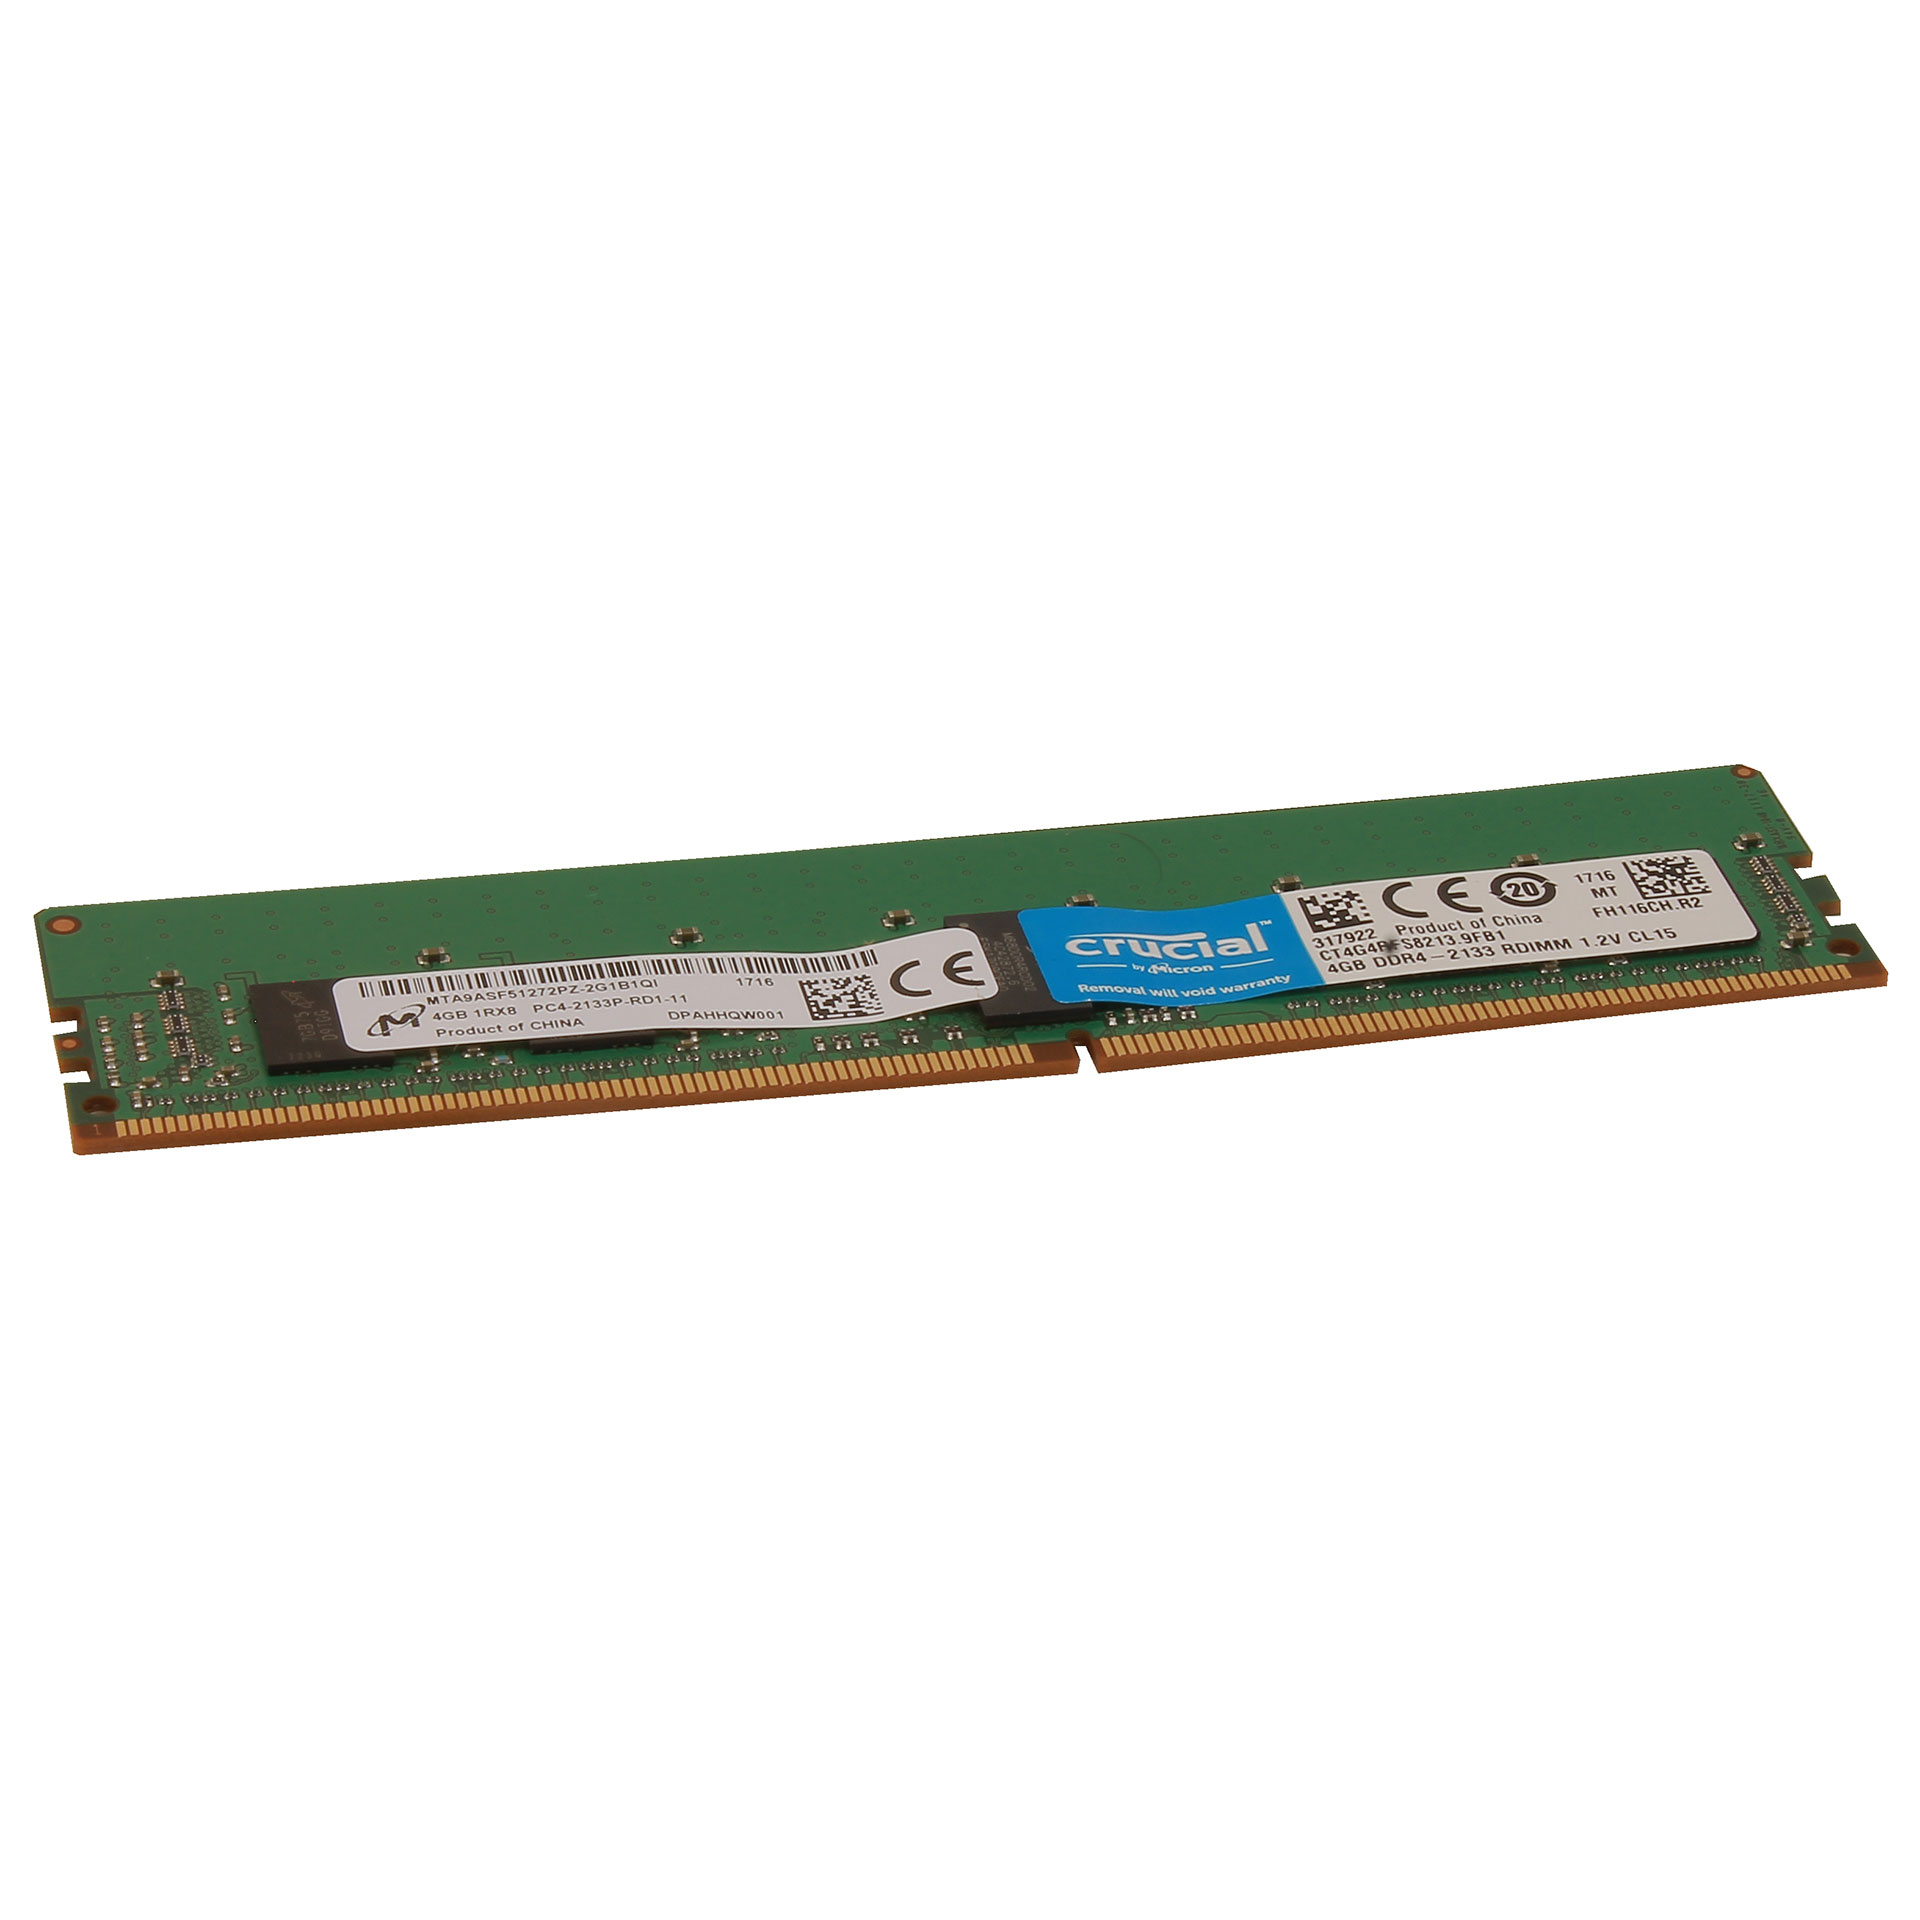 4 GB Micron Crucial Mta9asf51272pz-2G1 Memory Module for Server